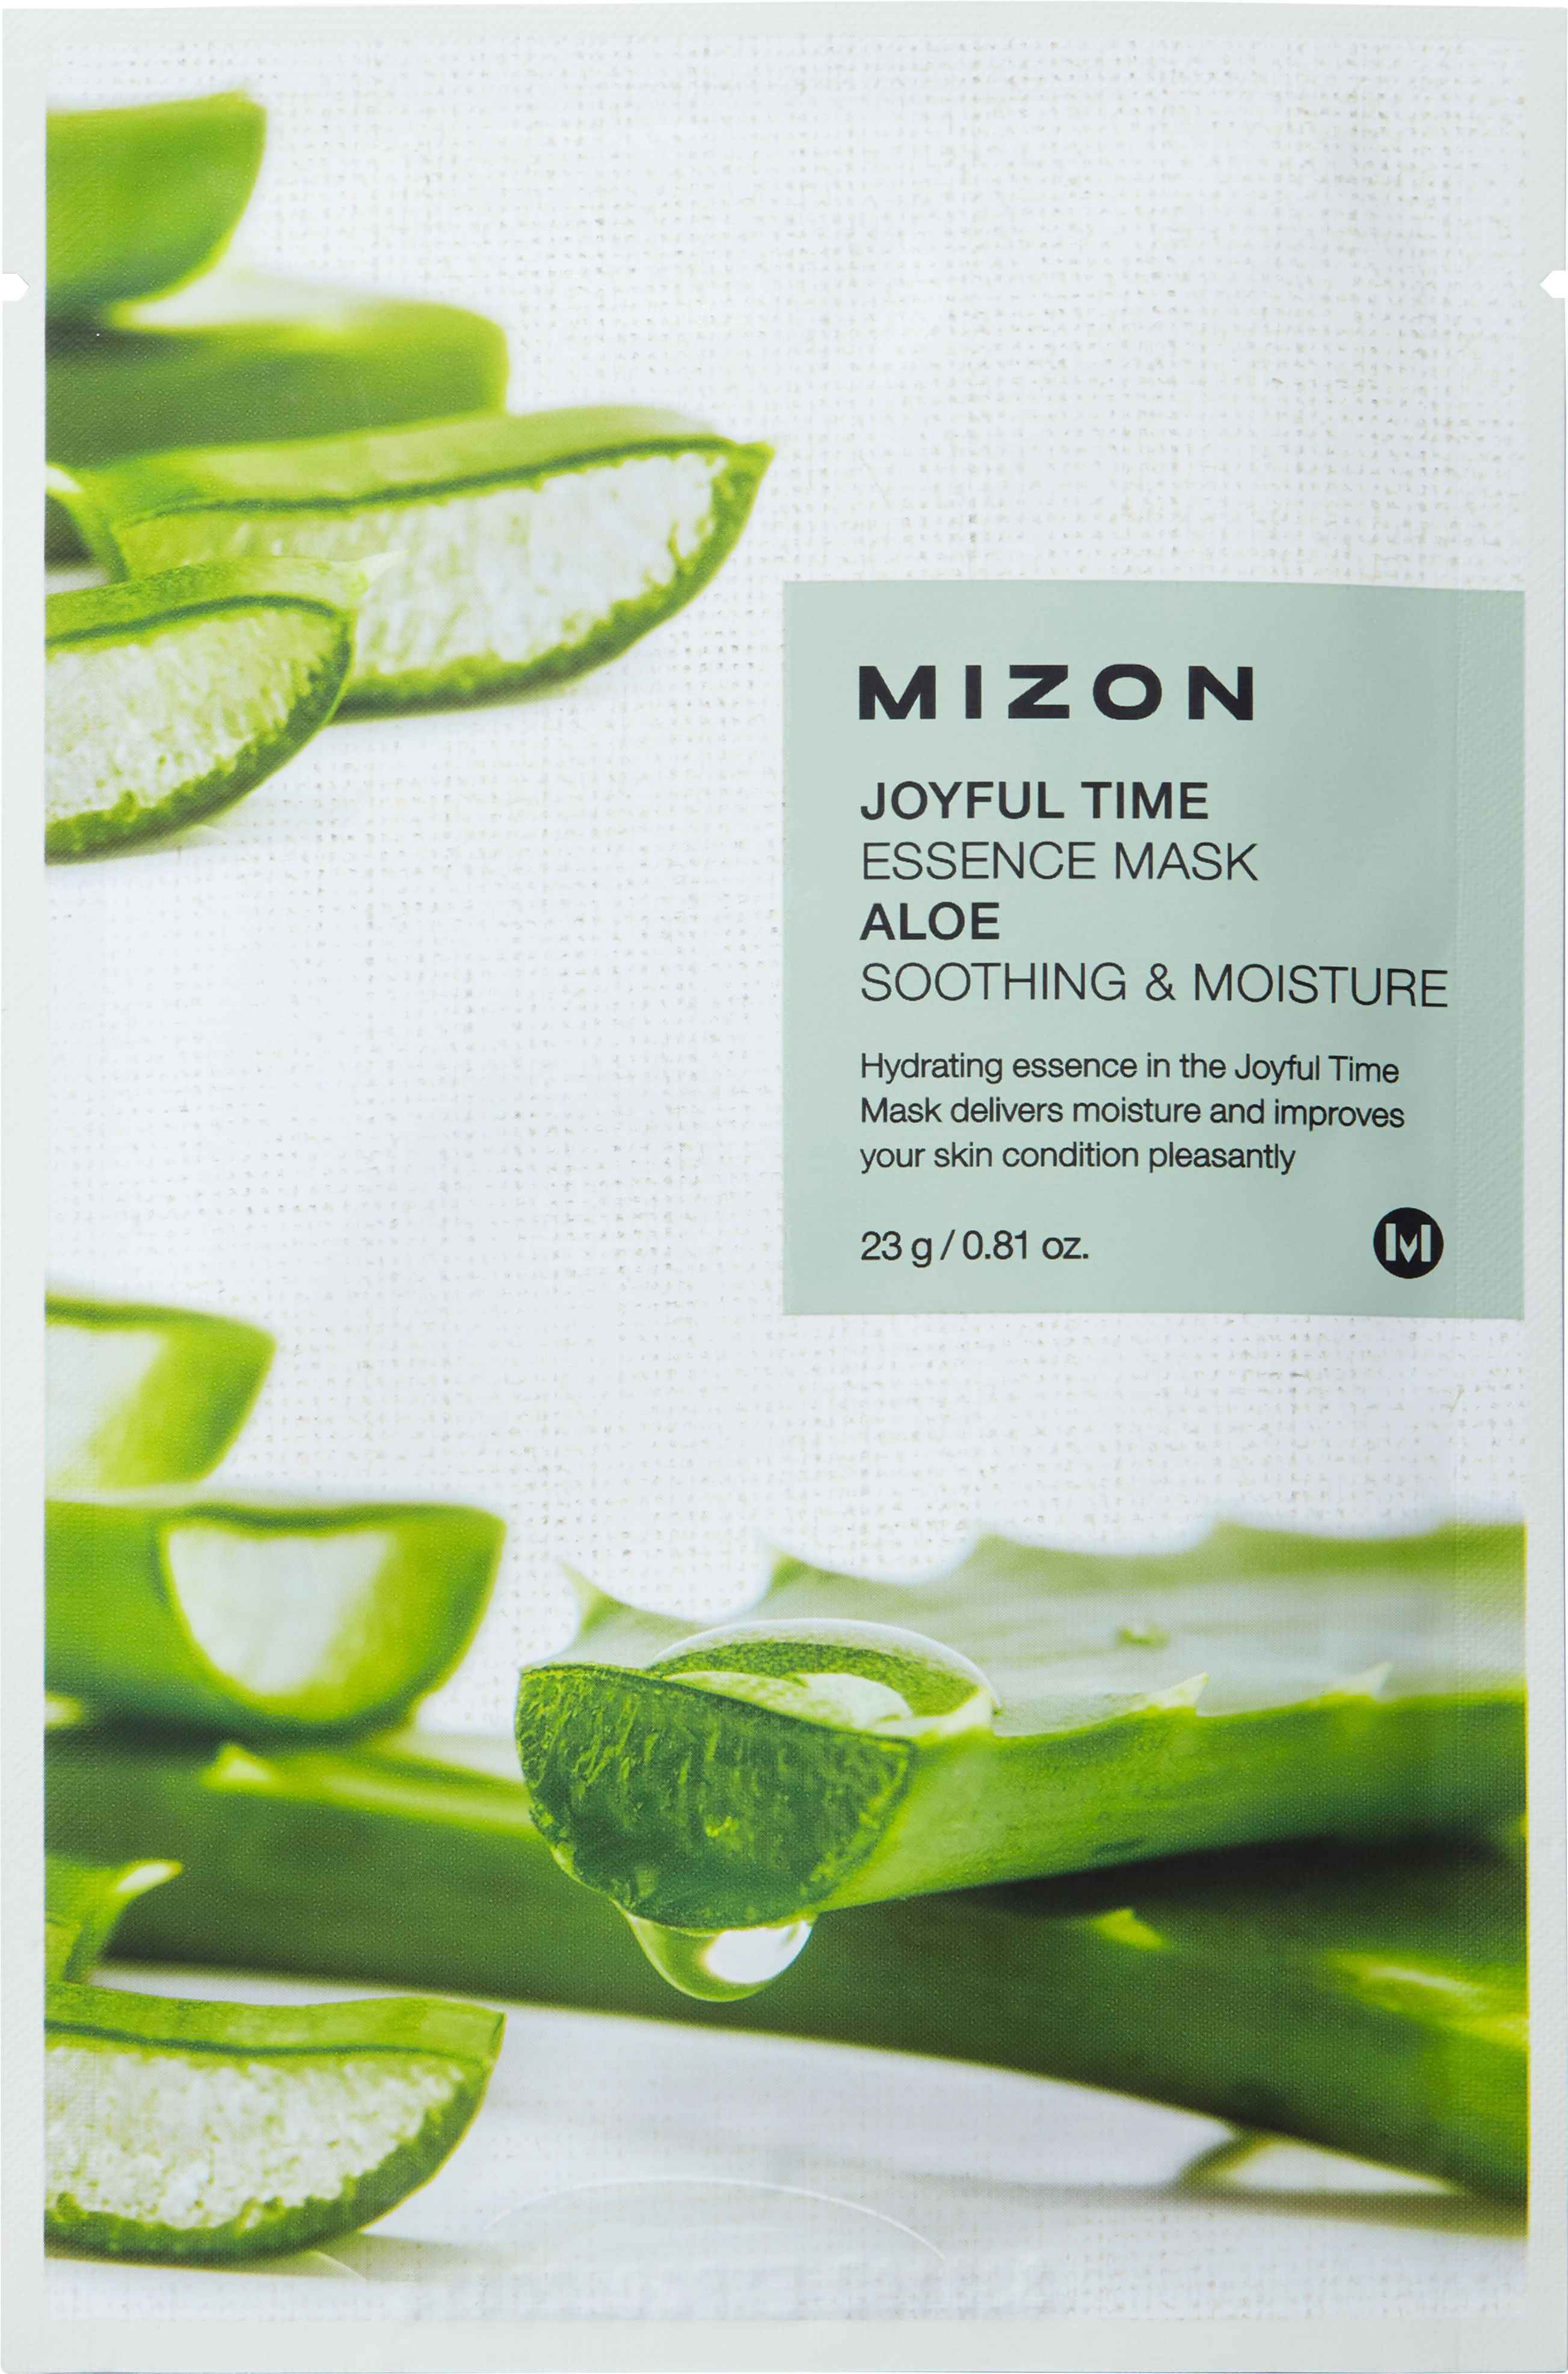 Mizon Joyful Time Essence Mask Aloe 23 g  1 sheet